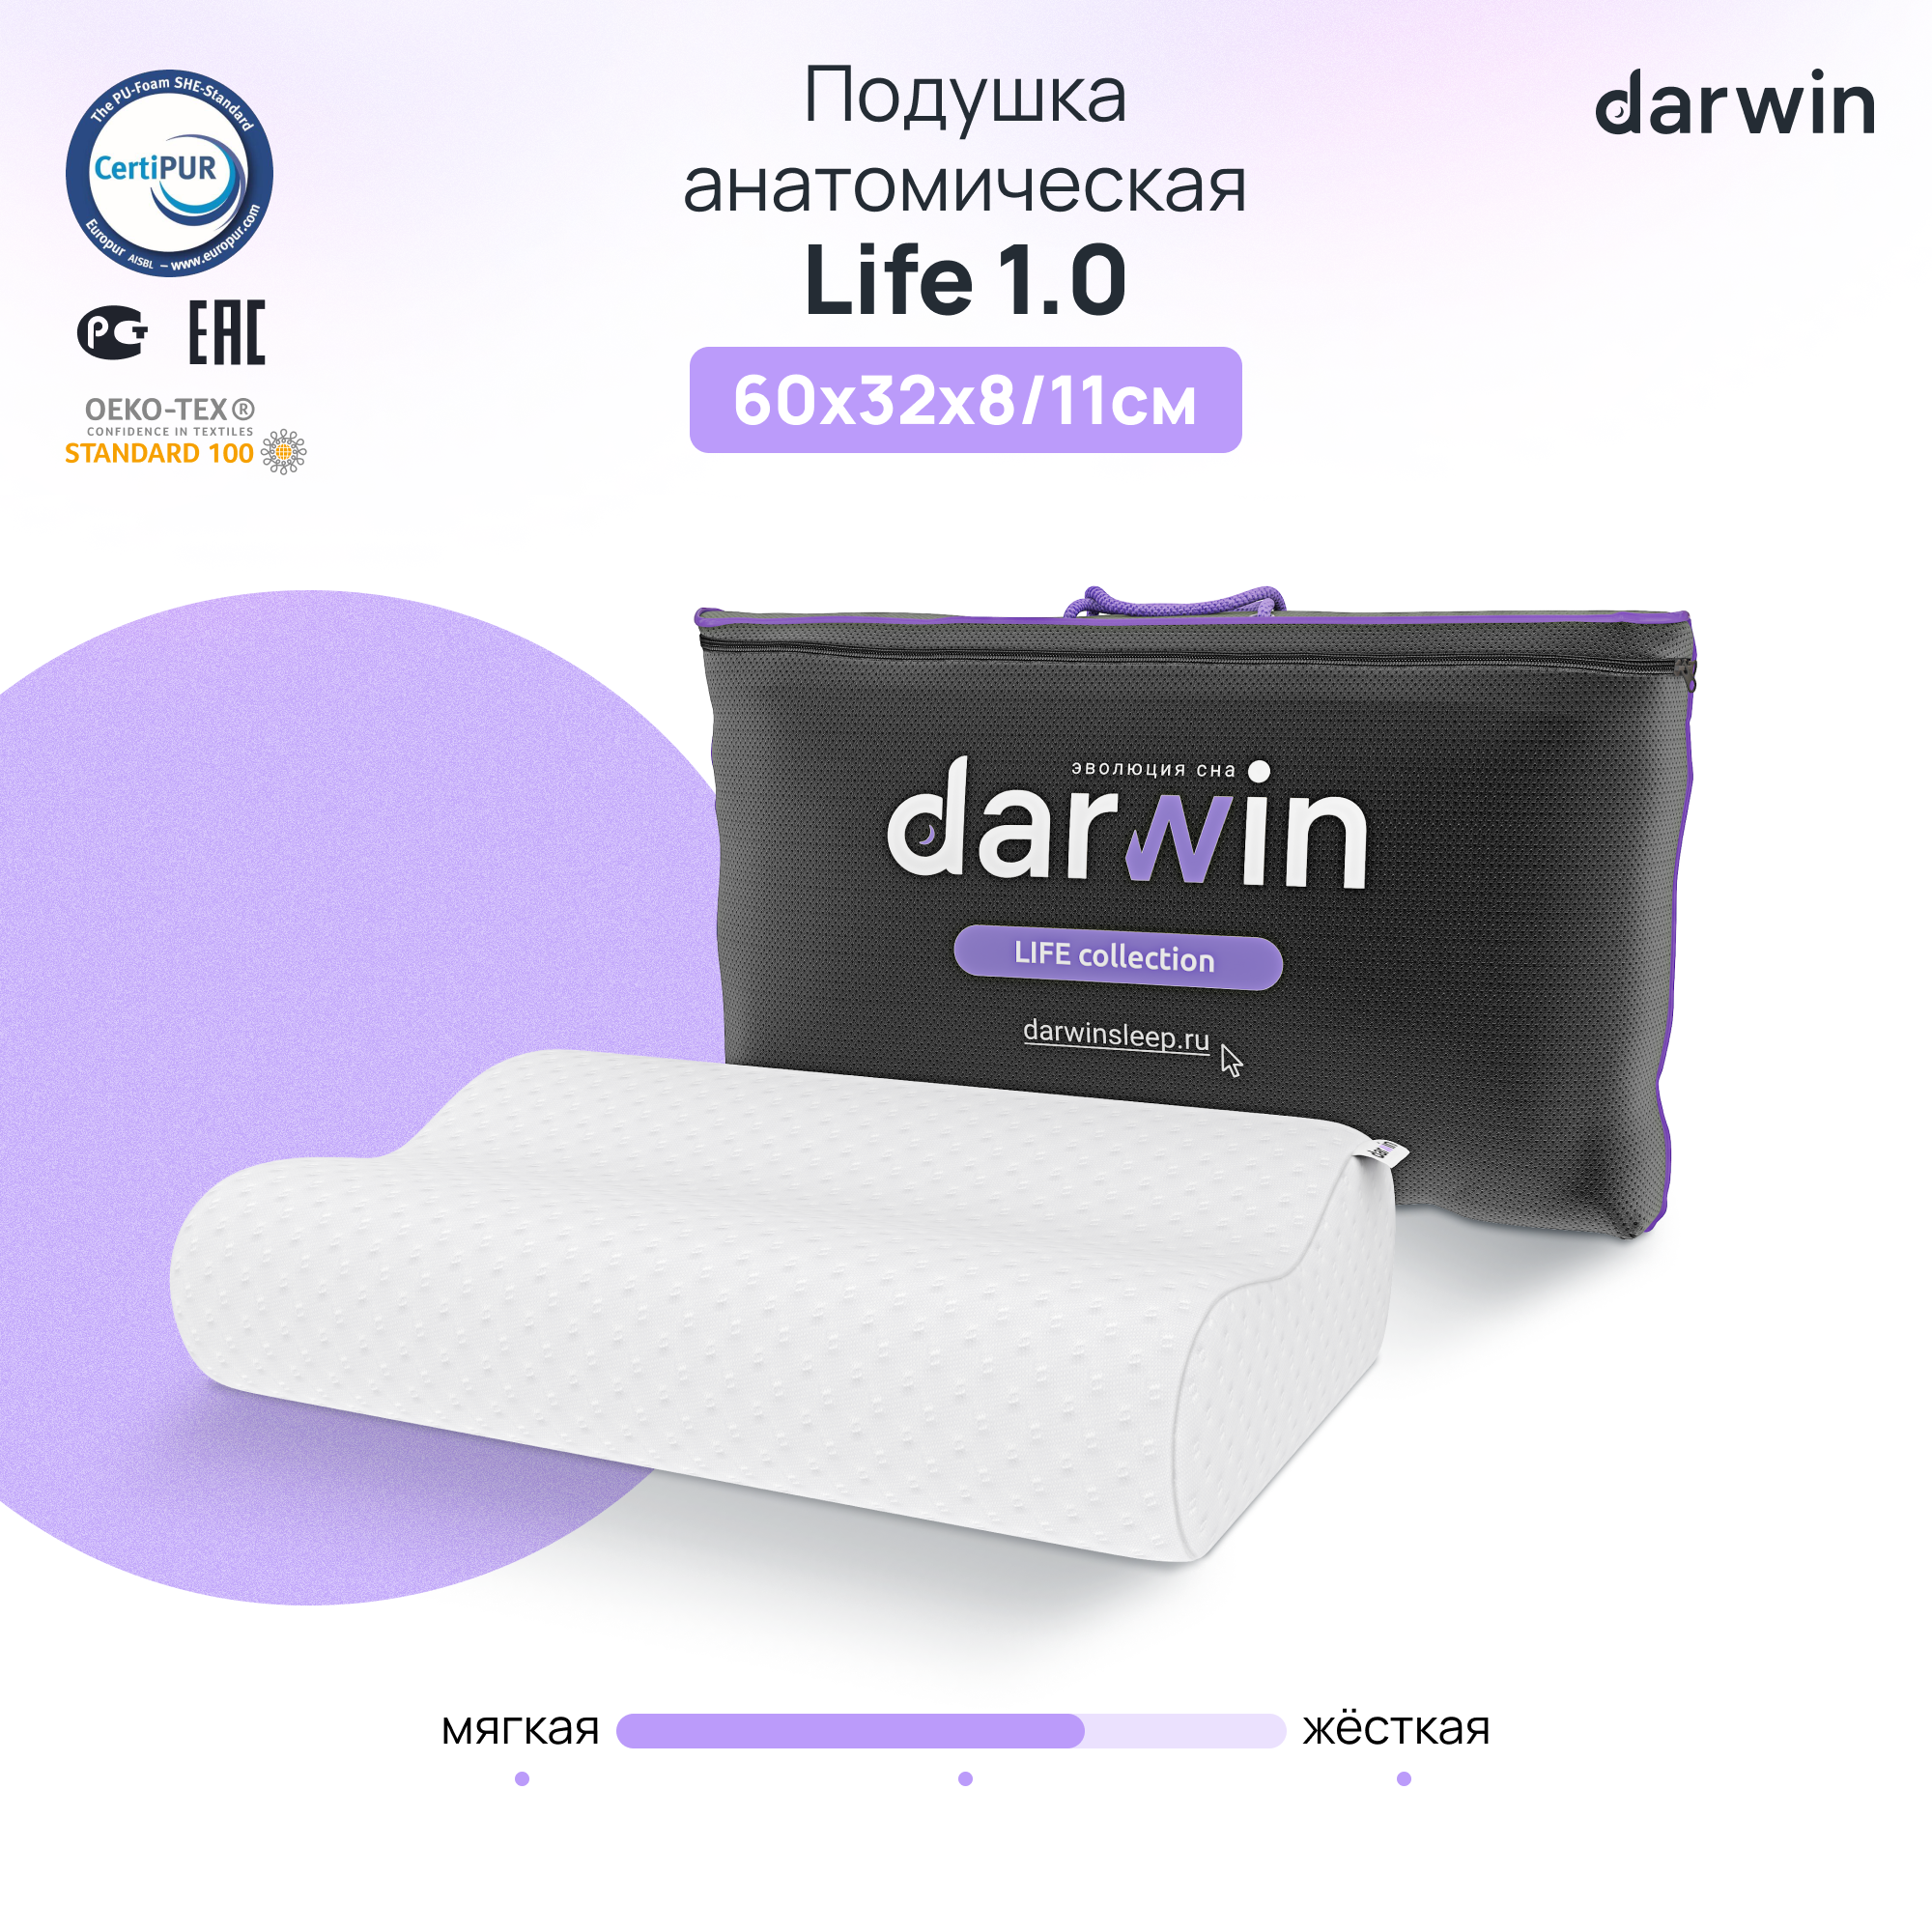 Анатомическая подушка Darwin Life 1.0, 32х60х8/11